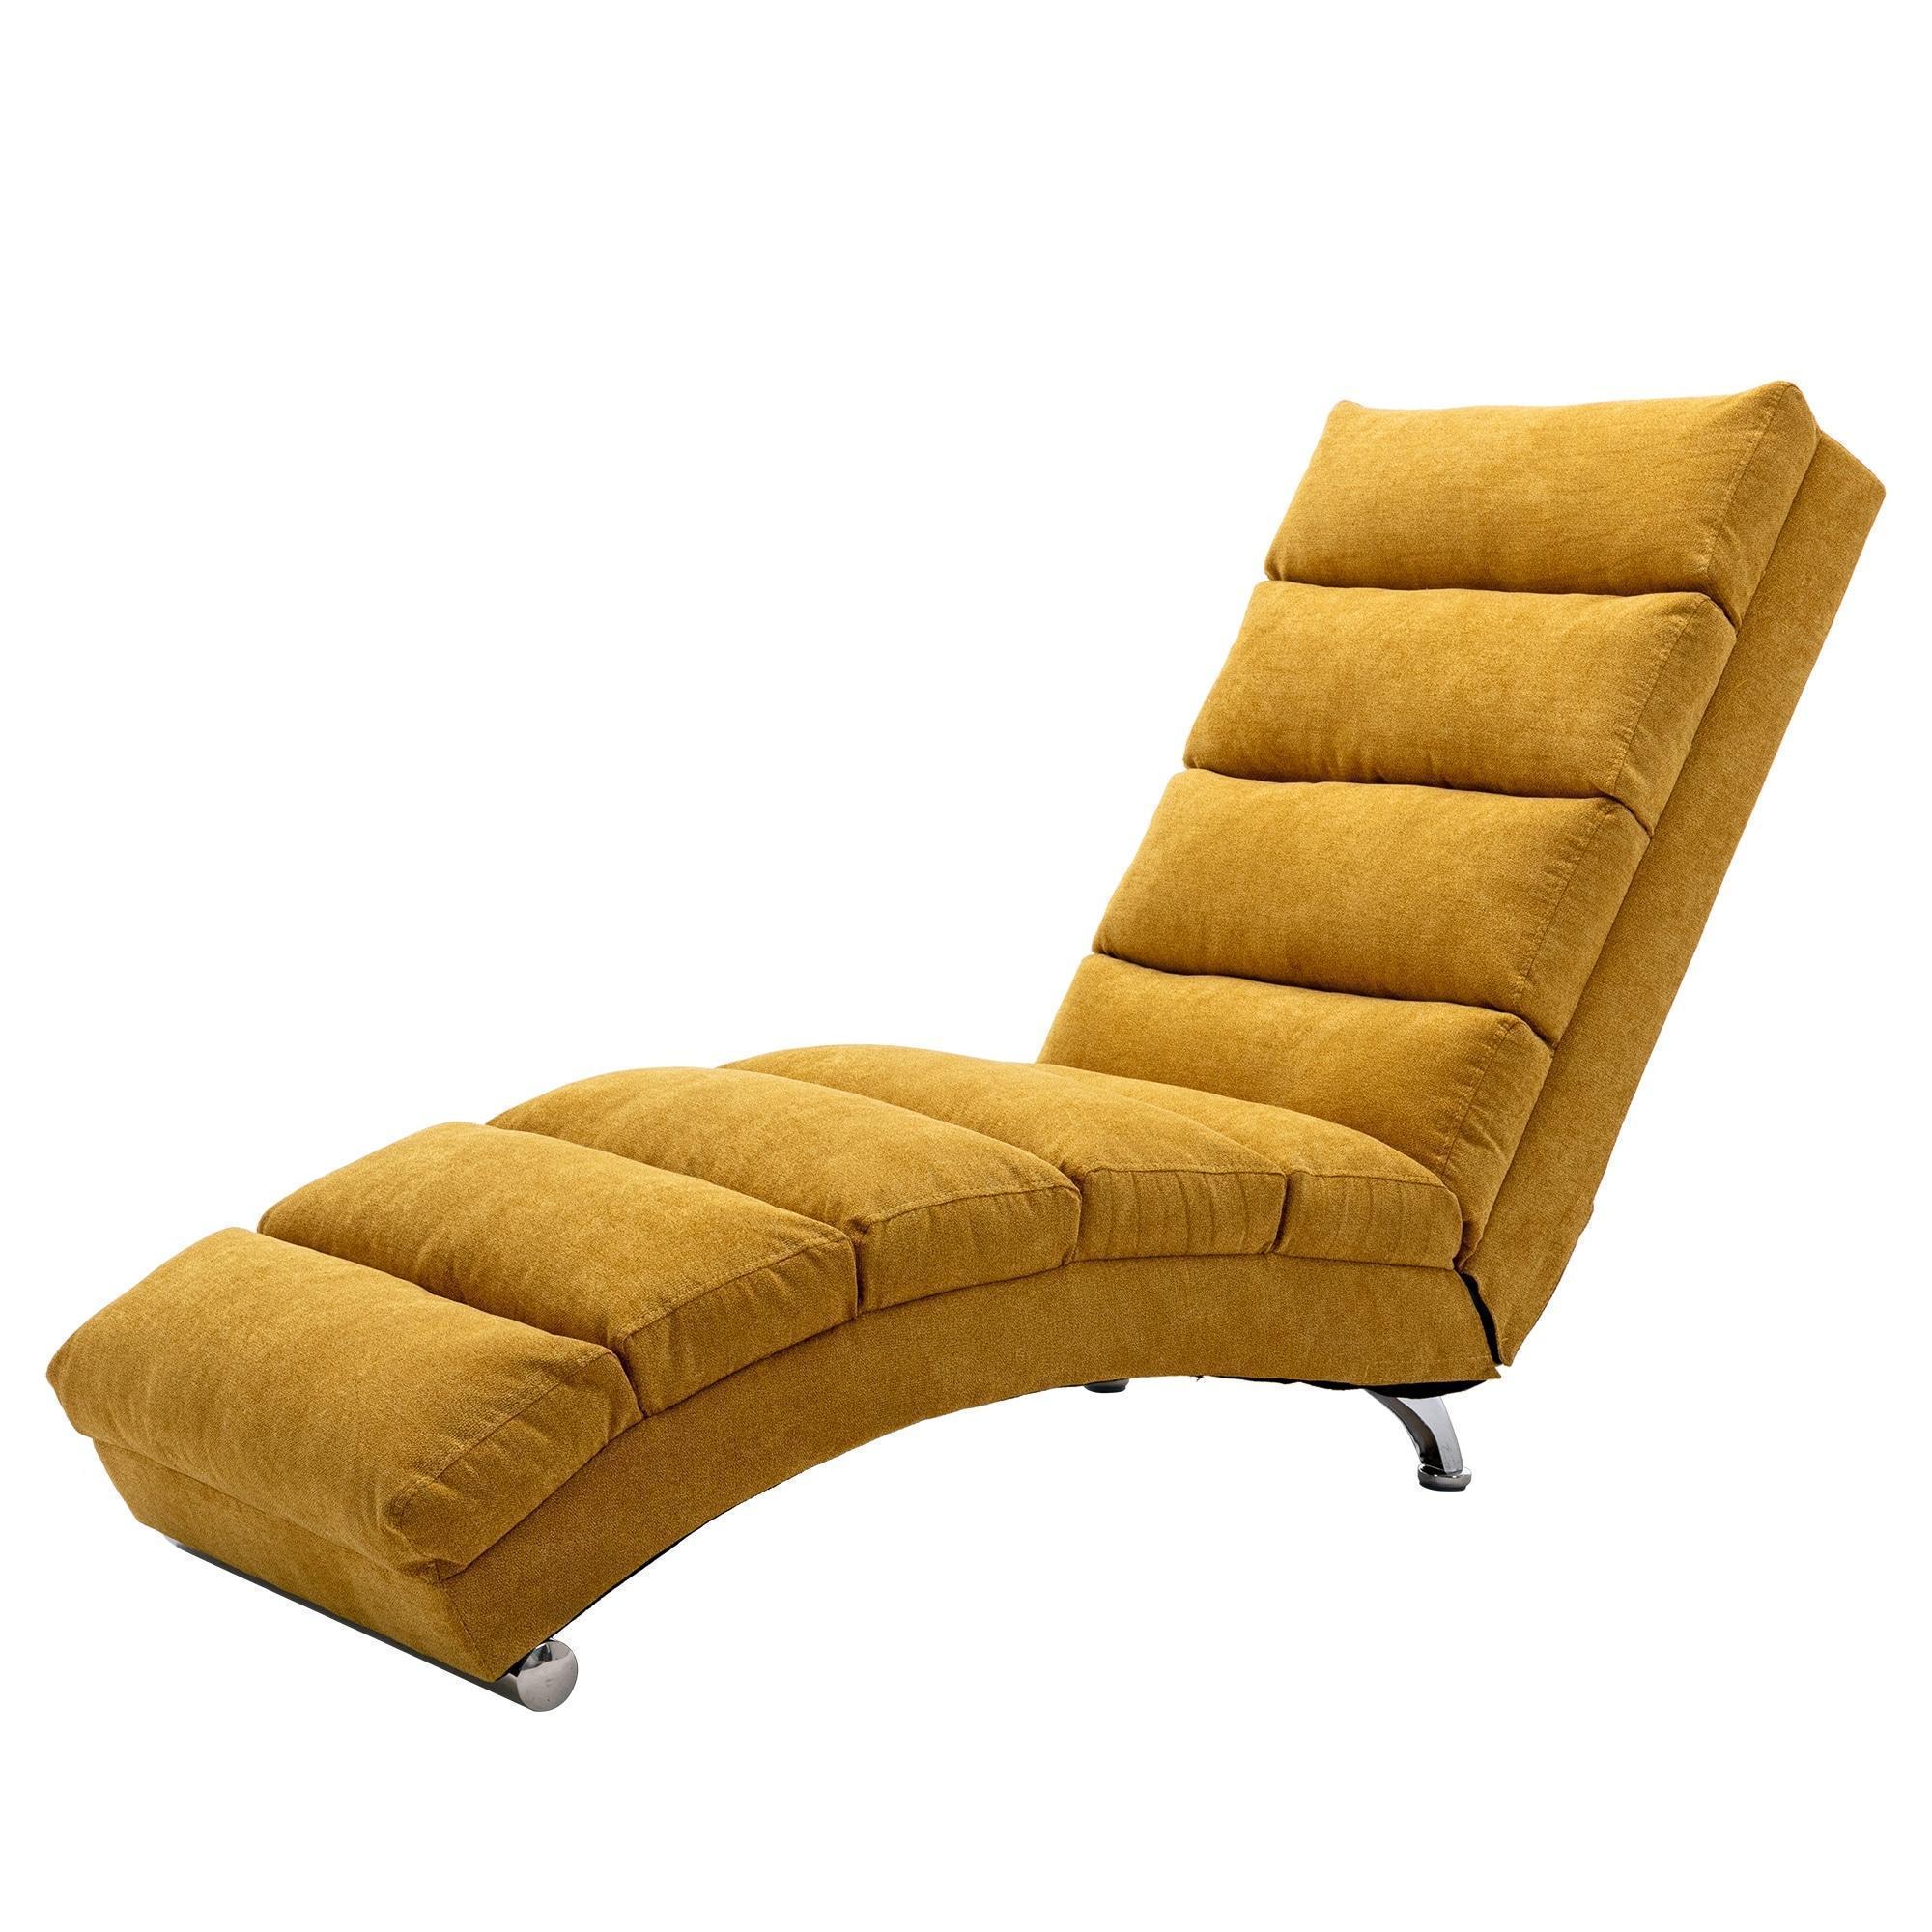 Electric multi-function recliner sofa Deals